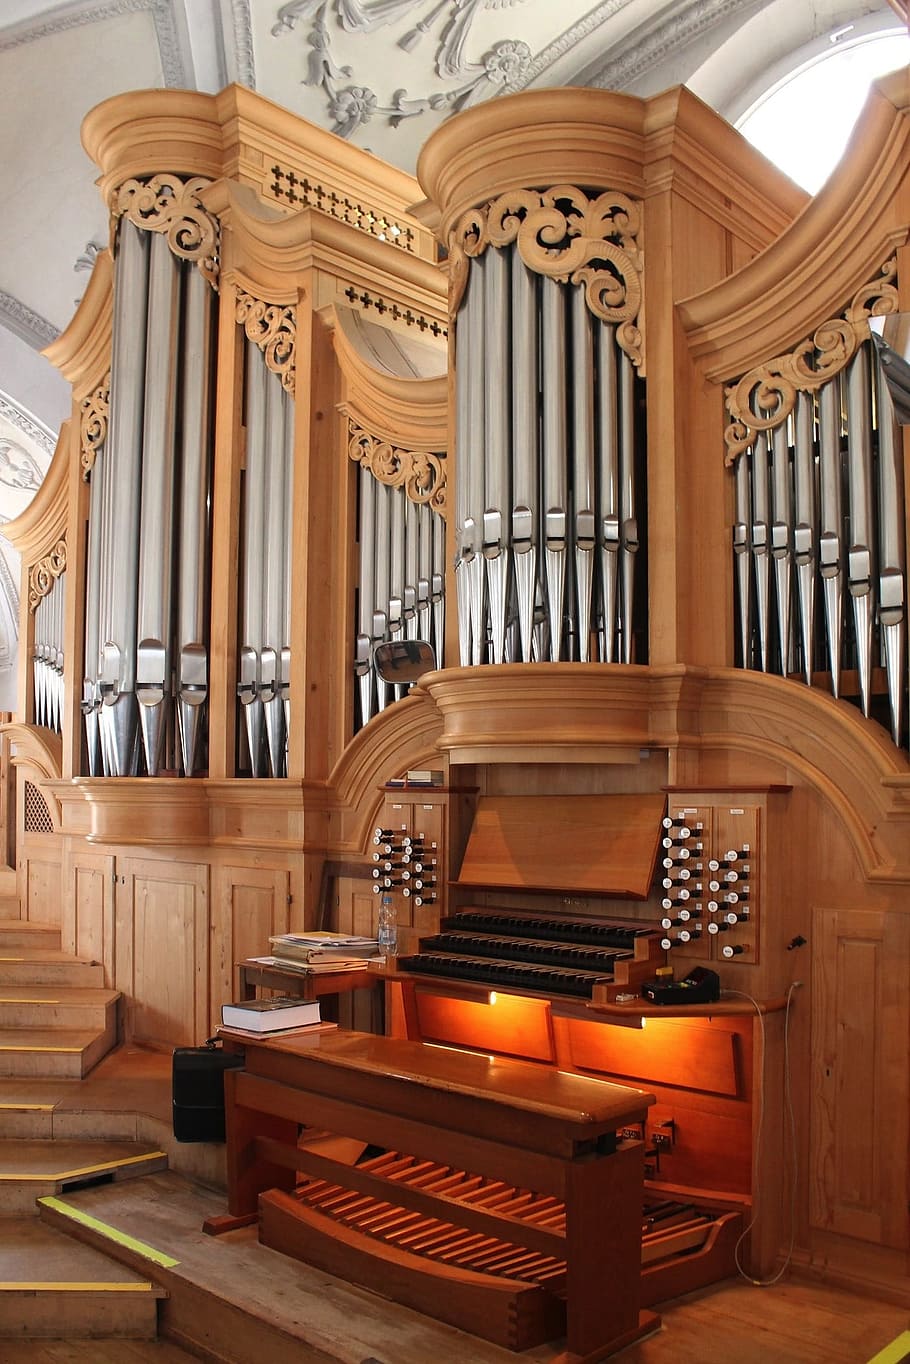 piano konsol cokelat, Jerman, Wolfratshausen, St Andreas, gereja, organ, musik, instrumen, hiasan, dekoratif